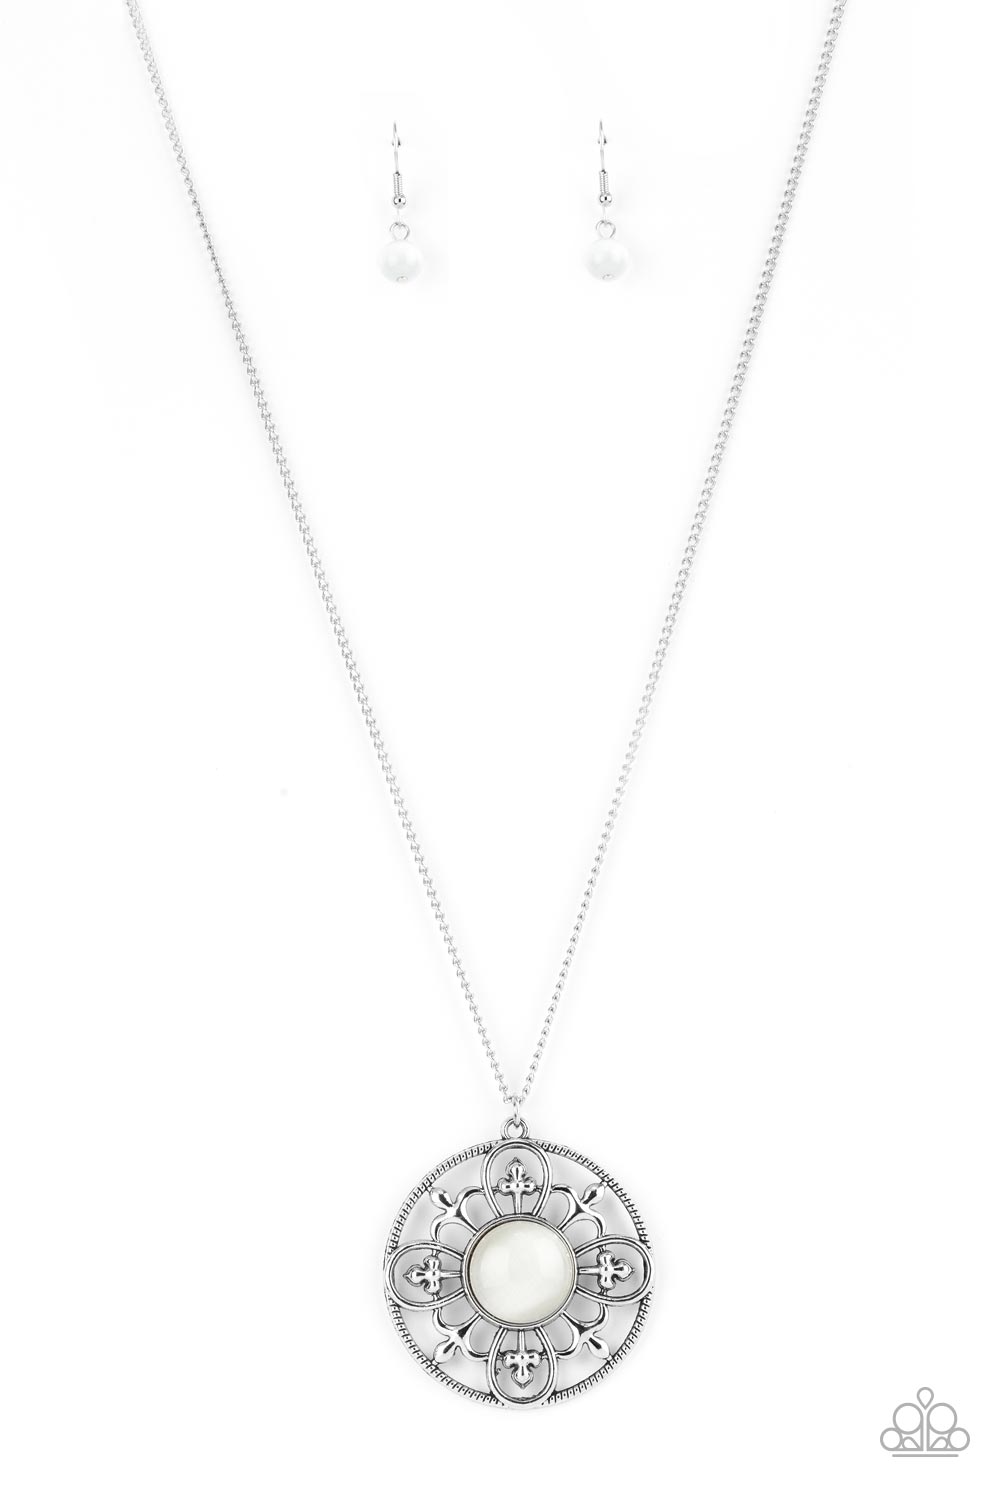 Celestial Compass - white - Paparazzi necklace